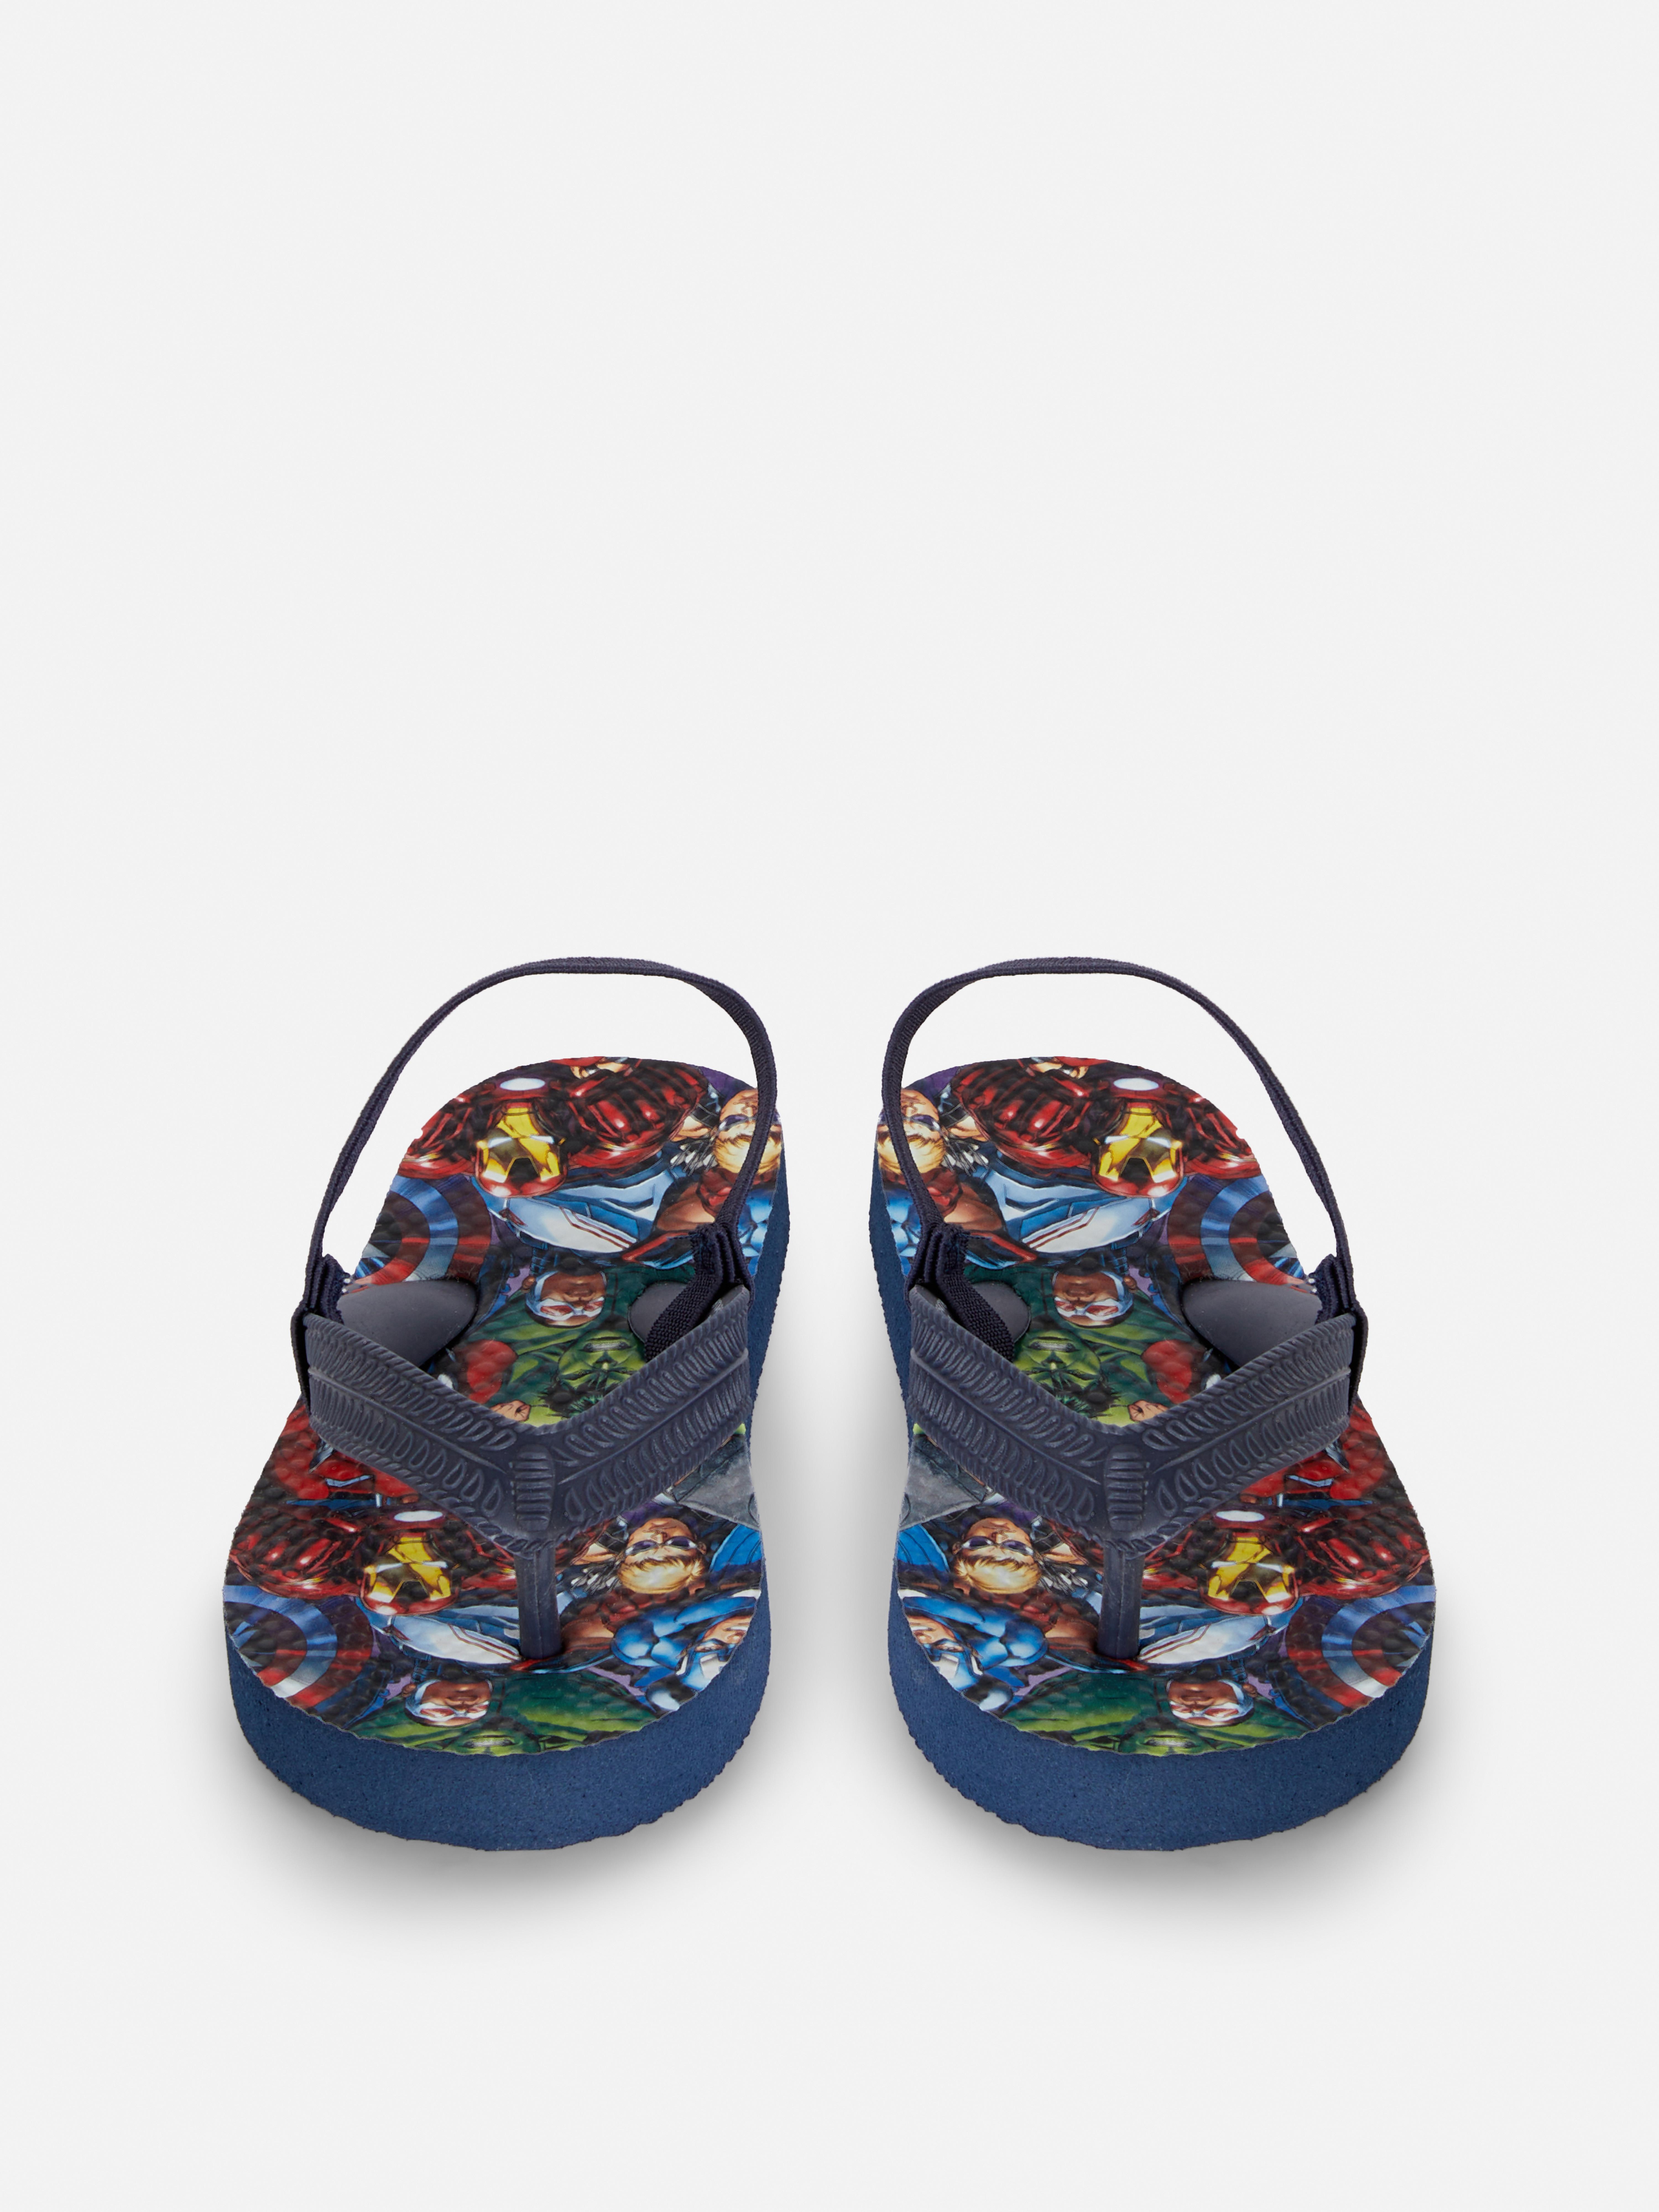 Marvel Boys Kids Avengers Flip Flops Sandals Pool Shoes Sizes Child-UK 8-UK3